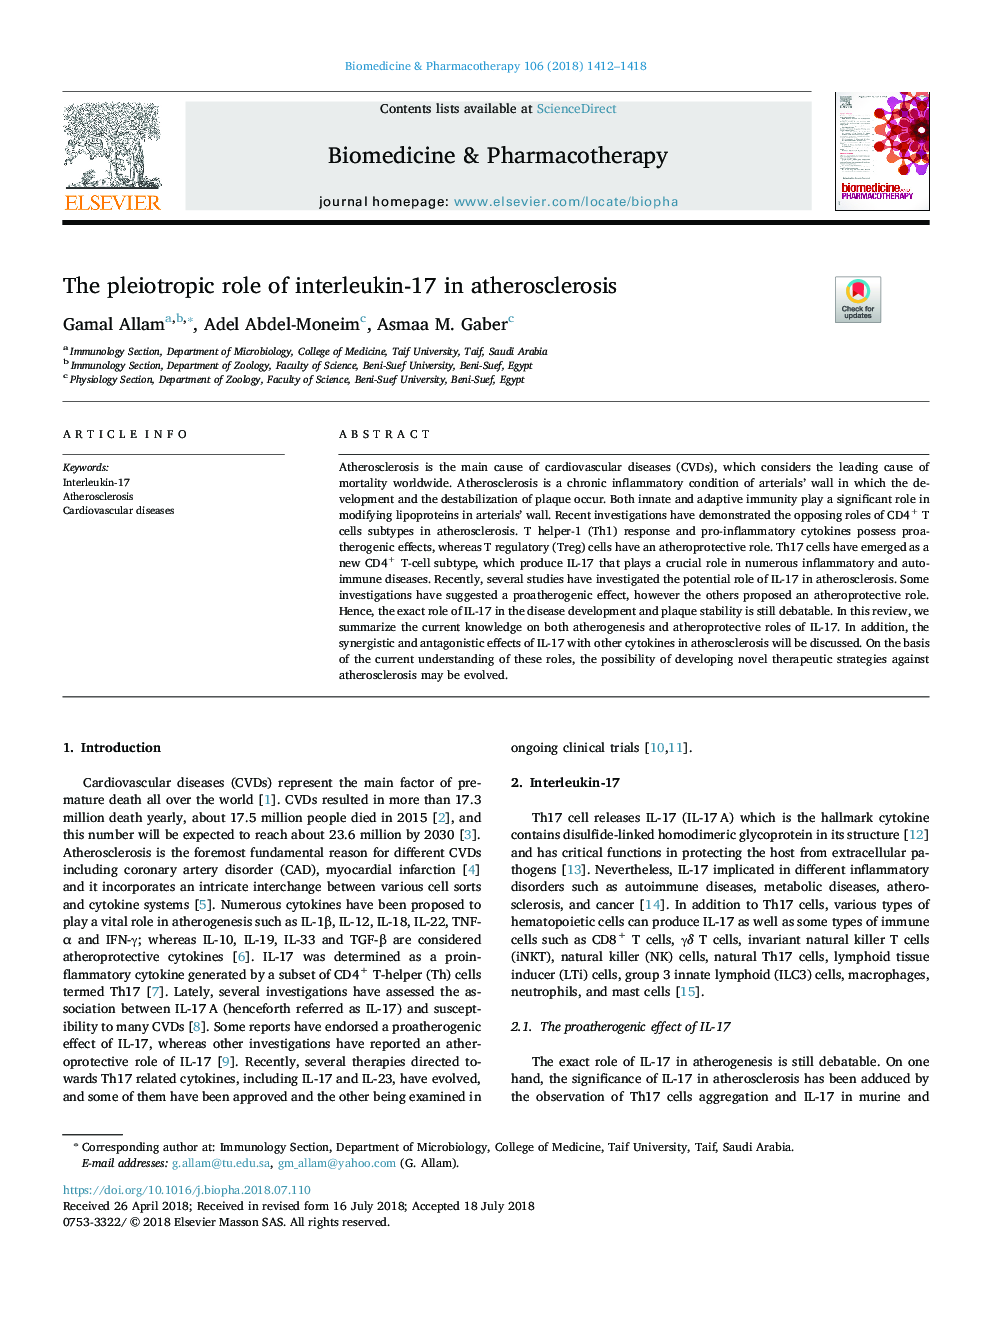 The pleiotropic role of interleukin-17 in atherosclerosis